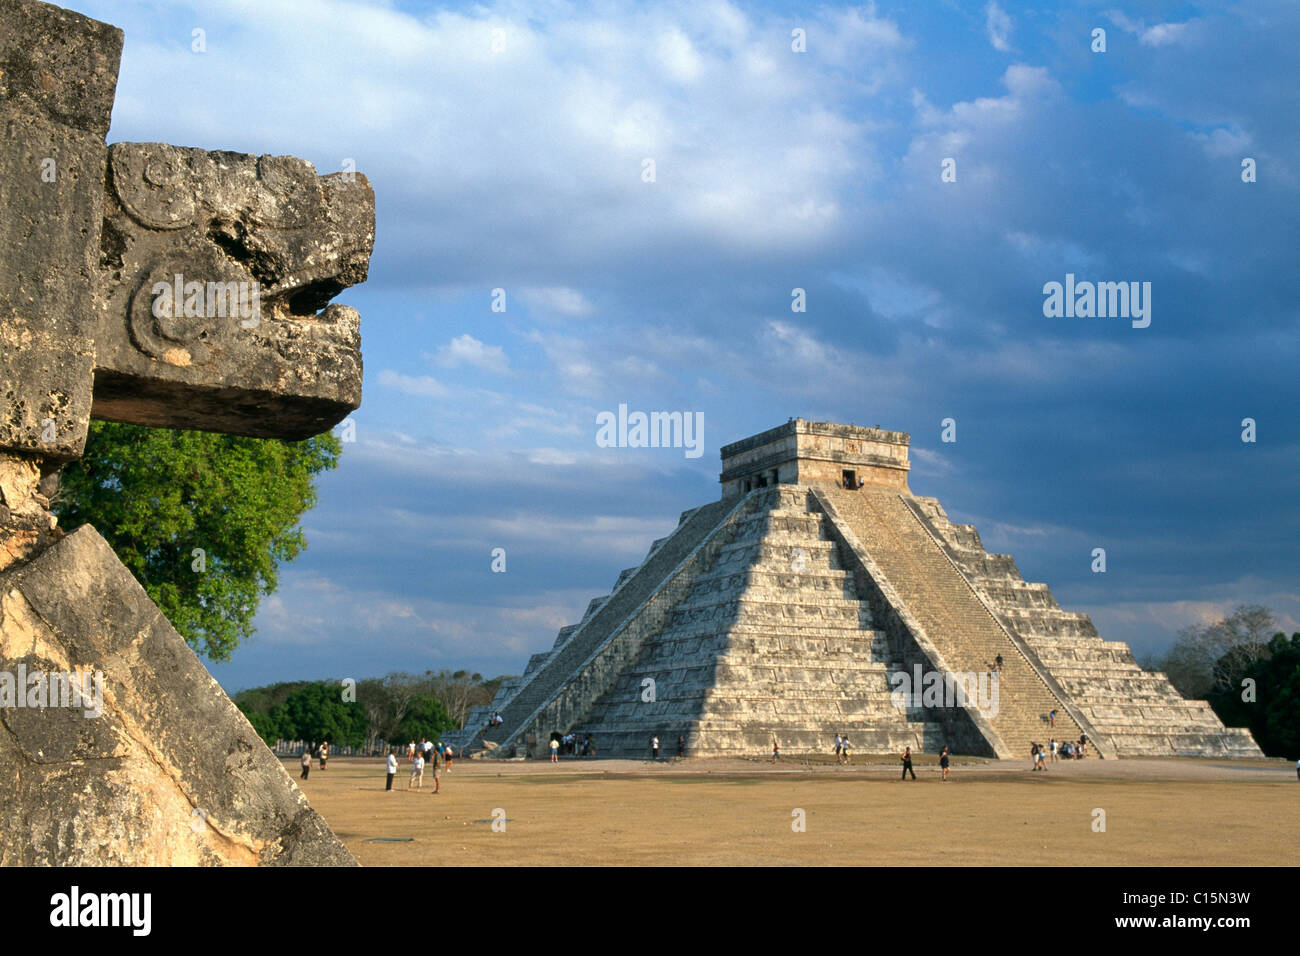 Pyramide de Kukulkan, Temple de Kukulkan, Chichen Itza, Yucatan, Mexique Banque D'Images